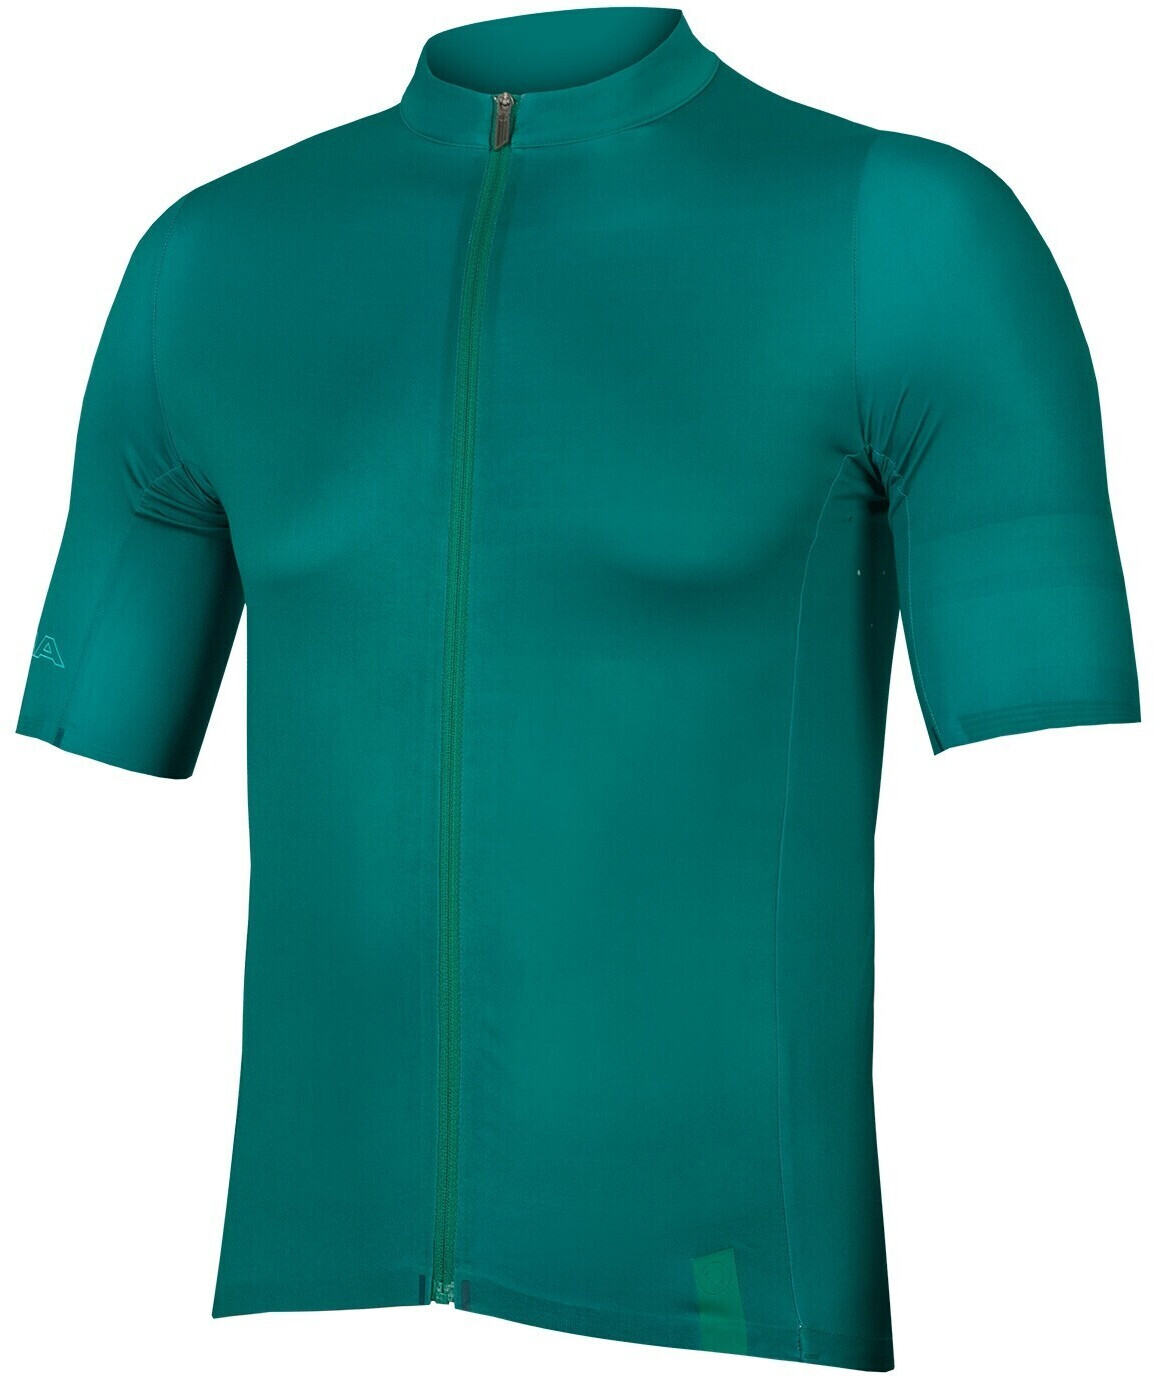 Photos - Cycling Clothing Endura Pro SL Short Sleeve Jersey esmerald green 